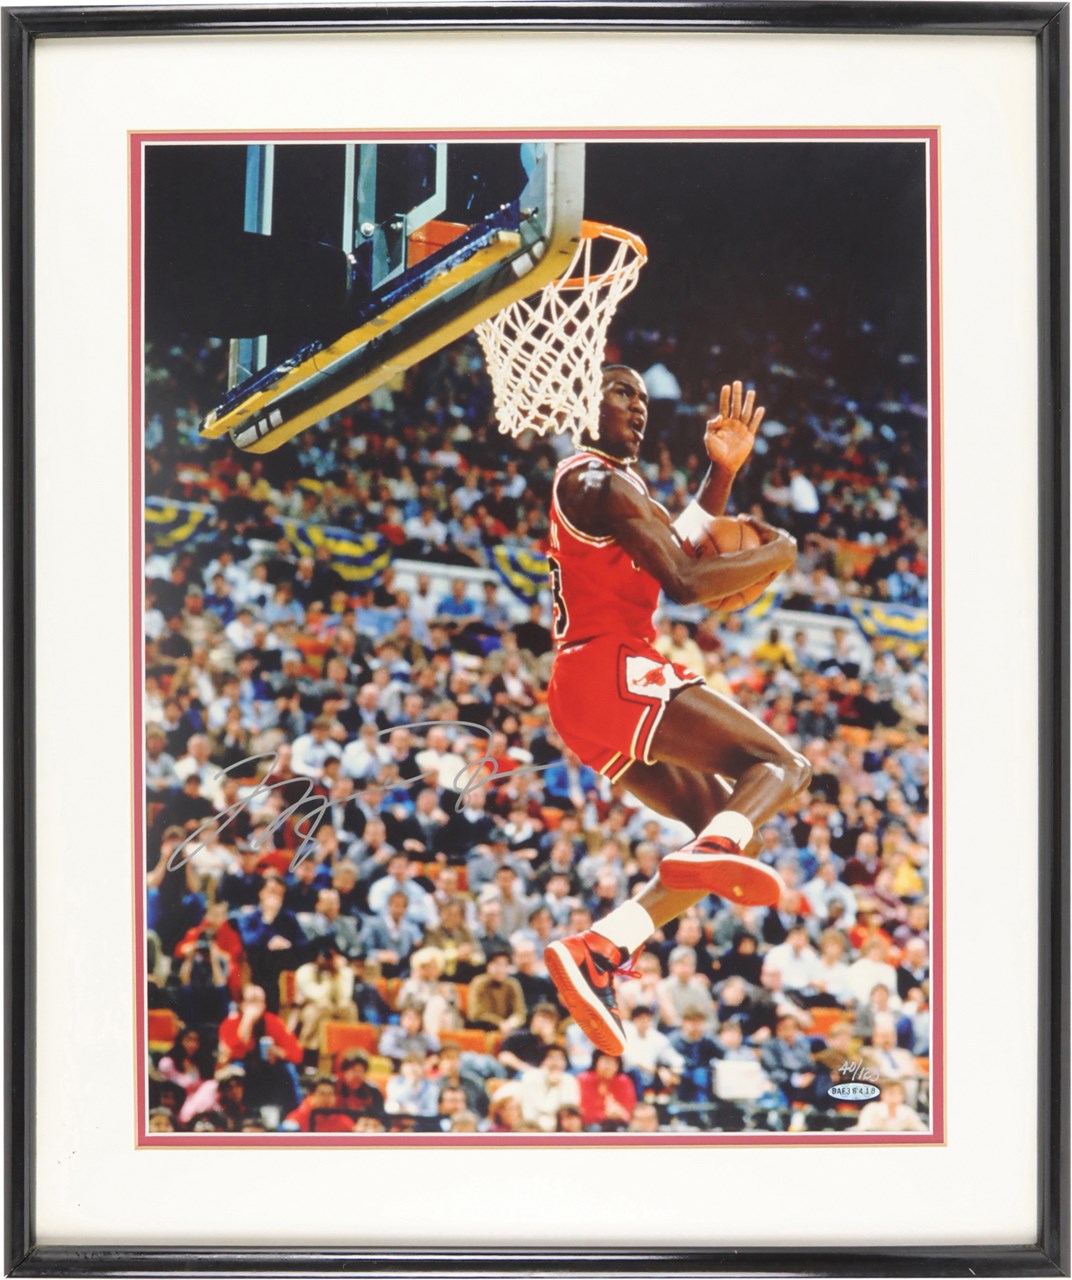 - Michael Jordan Signed Limited-Edition "Slam Dunk" Oversized Photograph (UDA)